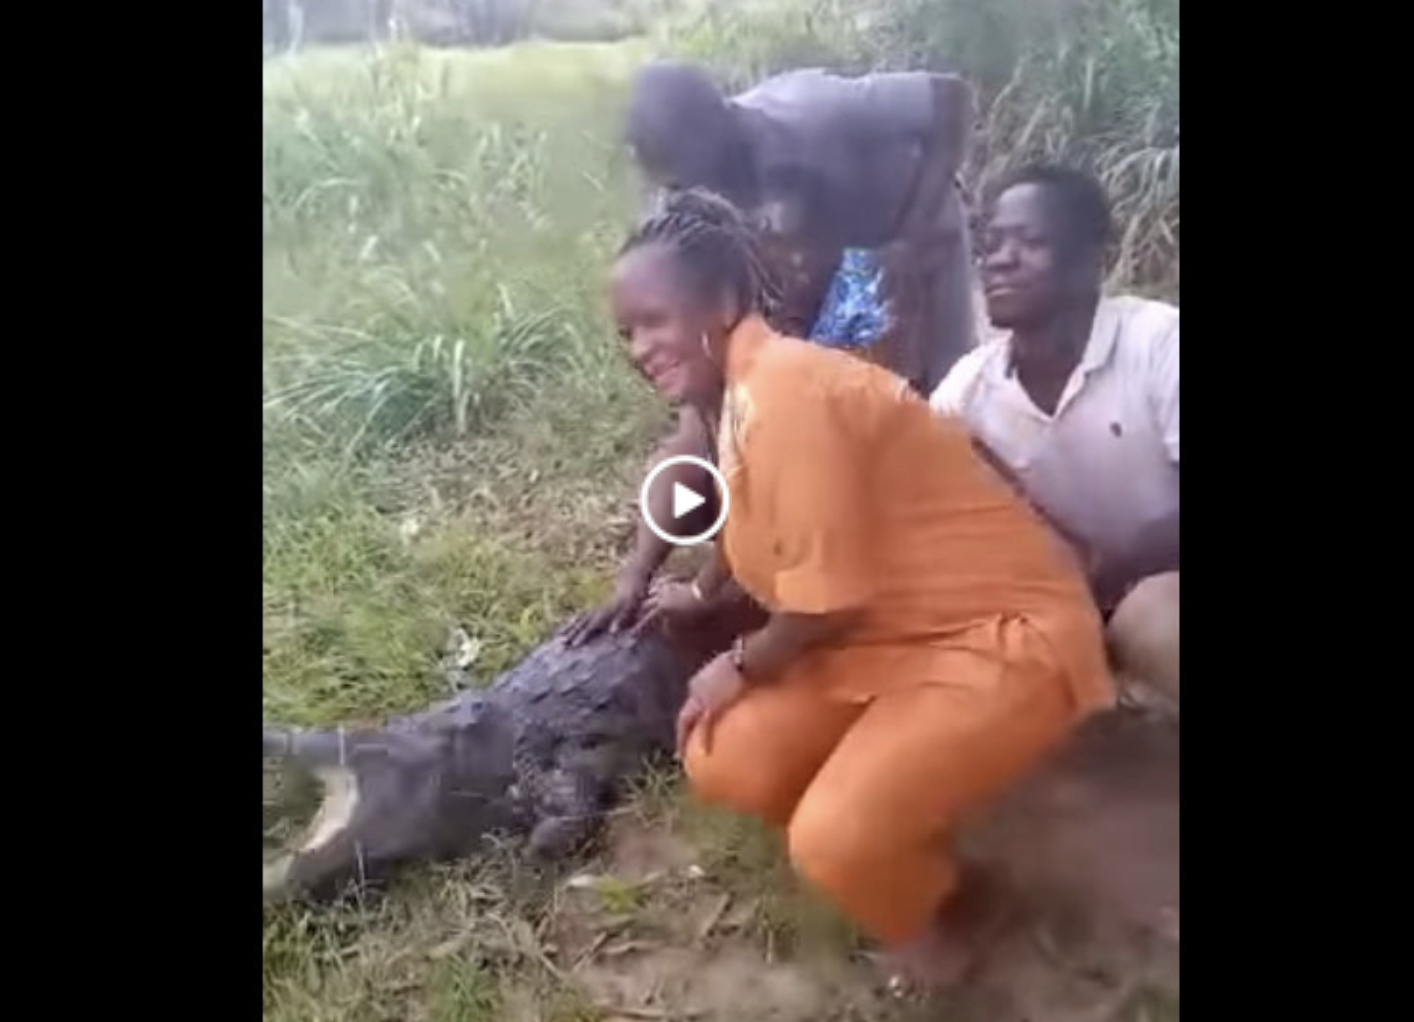 Woman in Ave Dakpa crocodile attack video sustained minor injury